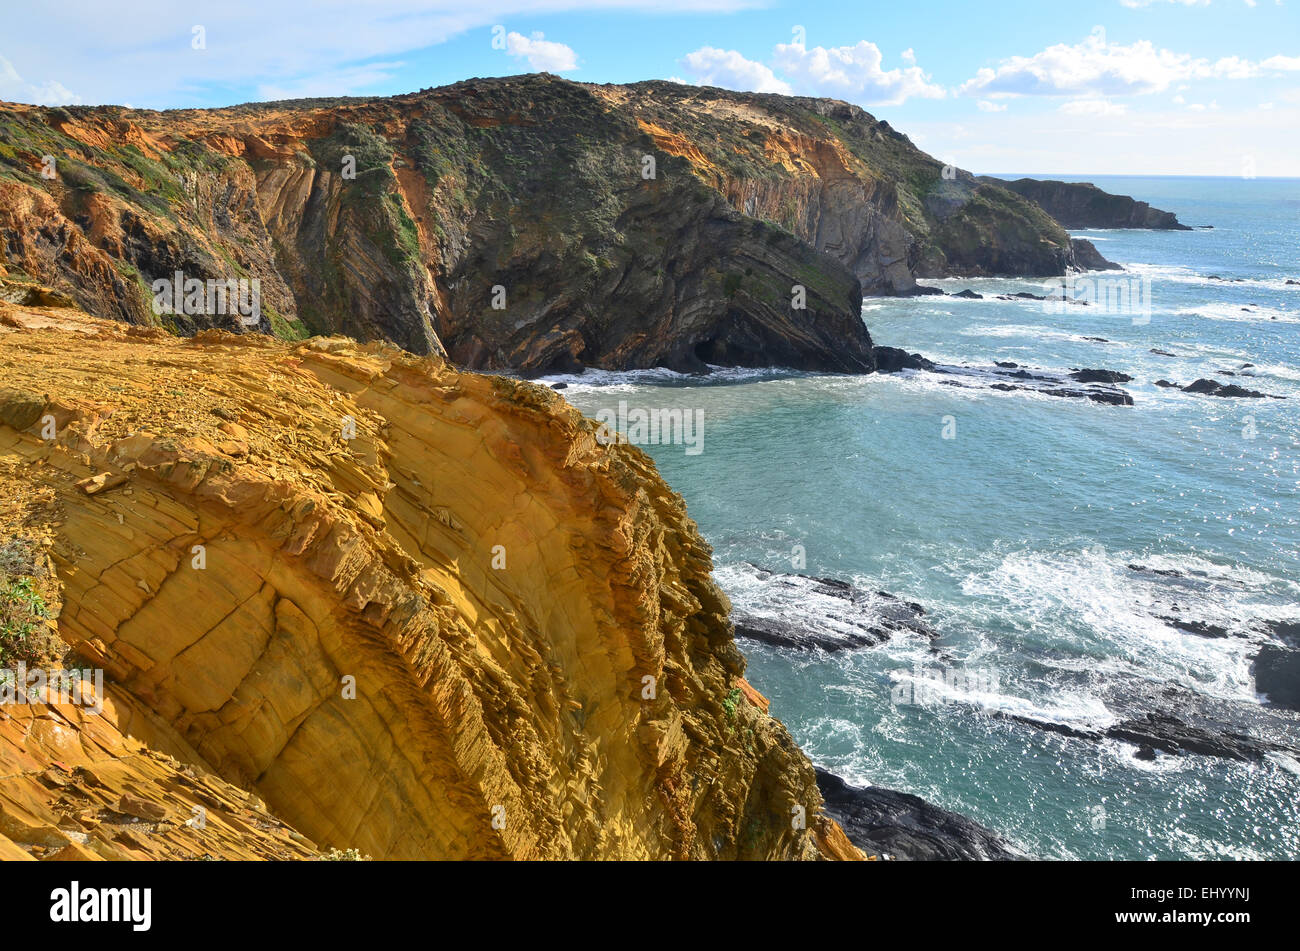 Portugal, Europe, Atlantic, coast, zambujeira, odemira, alentejo, cliffs, red, sea, waves, bay, tectonic, fold Stock Photo